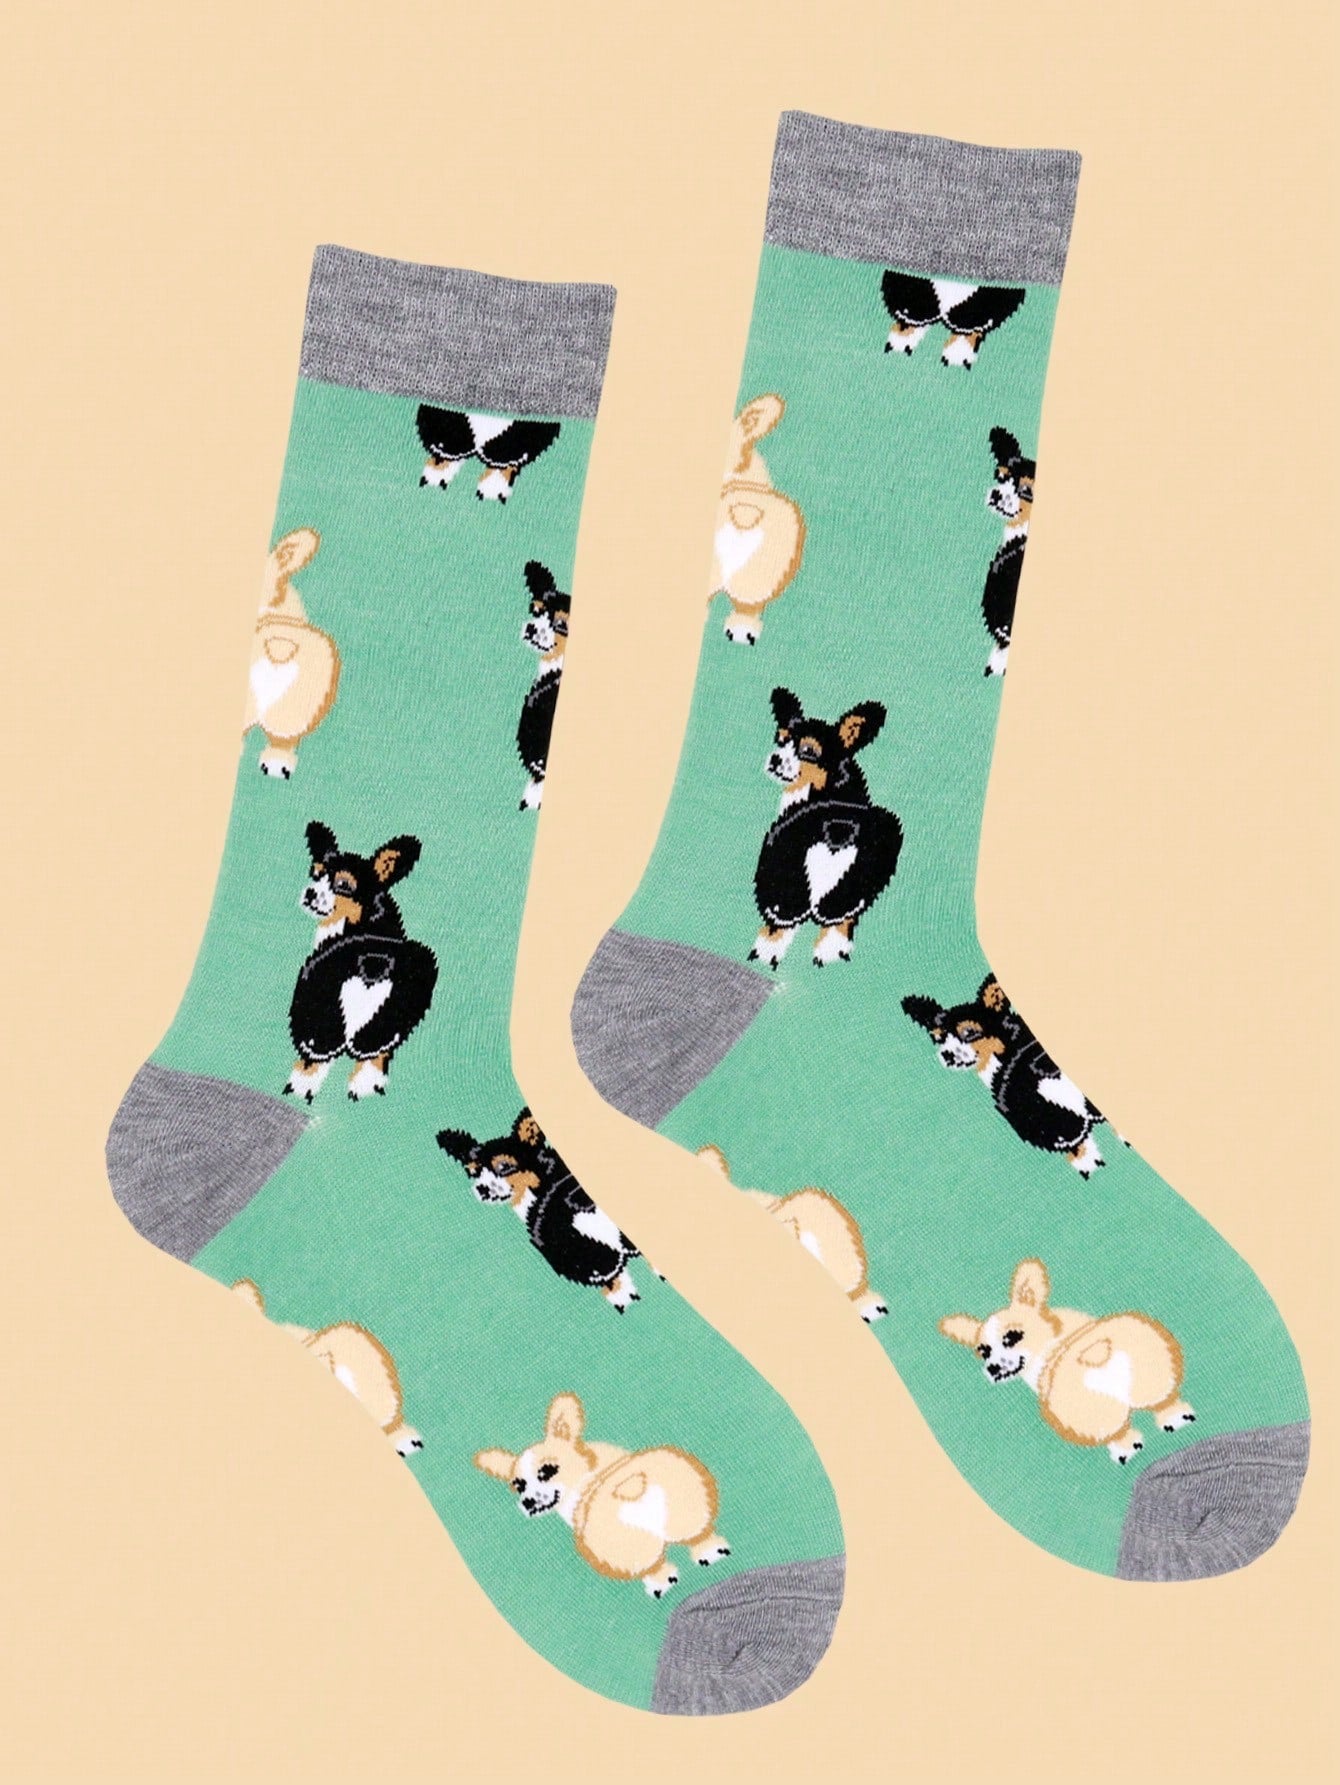 Corgi, Novelty Socks, Adult Socks, Dog Socks, Green